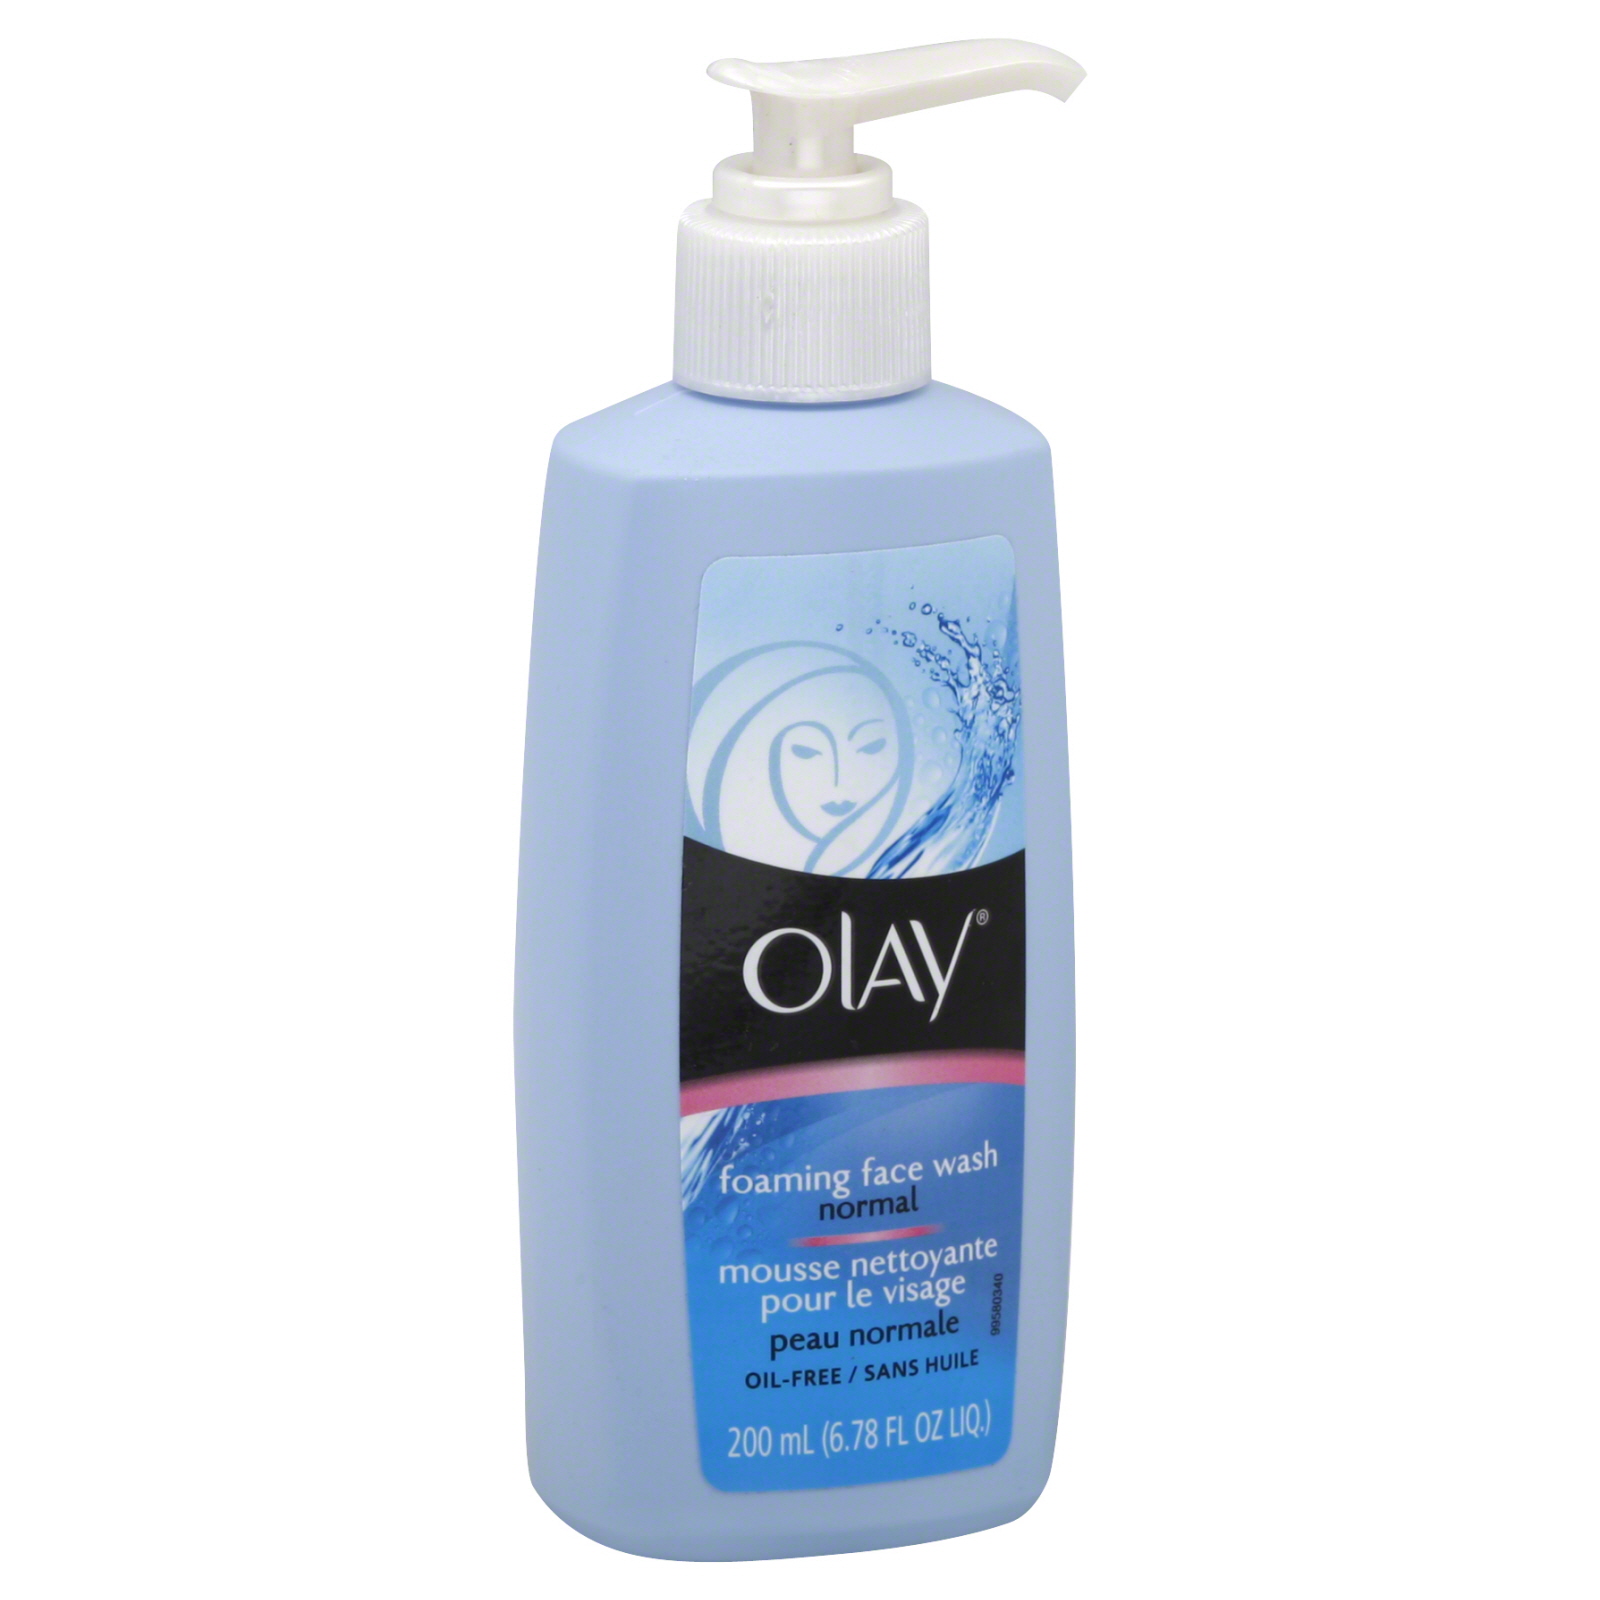 Olay Foaming Face Wash, Normal Skin, 6.78 fl oz